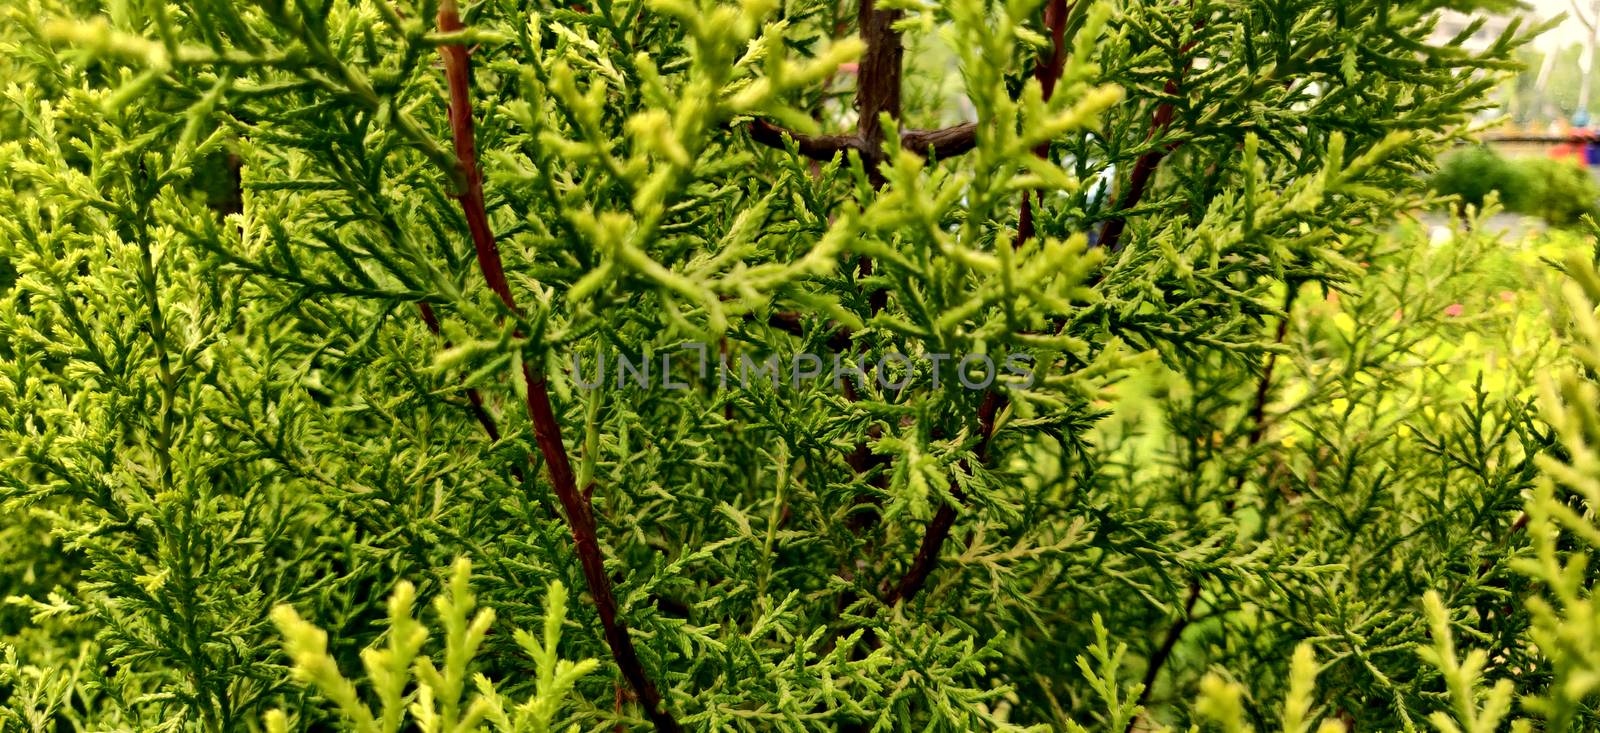 Green thuja leaves looking like trees by mshivangi92